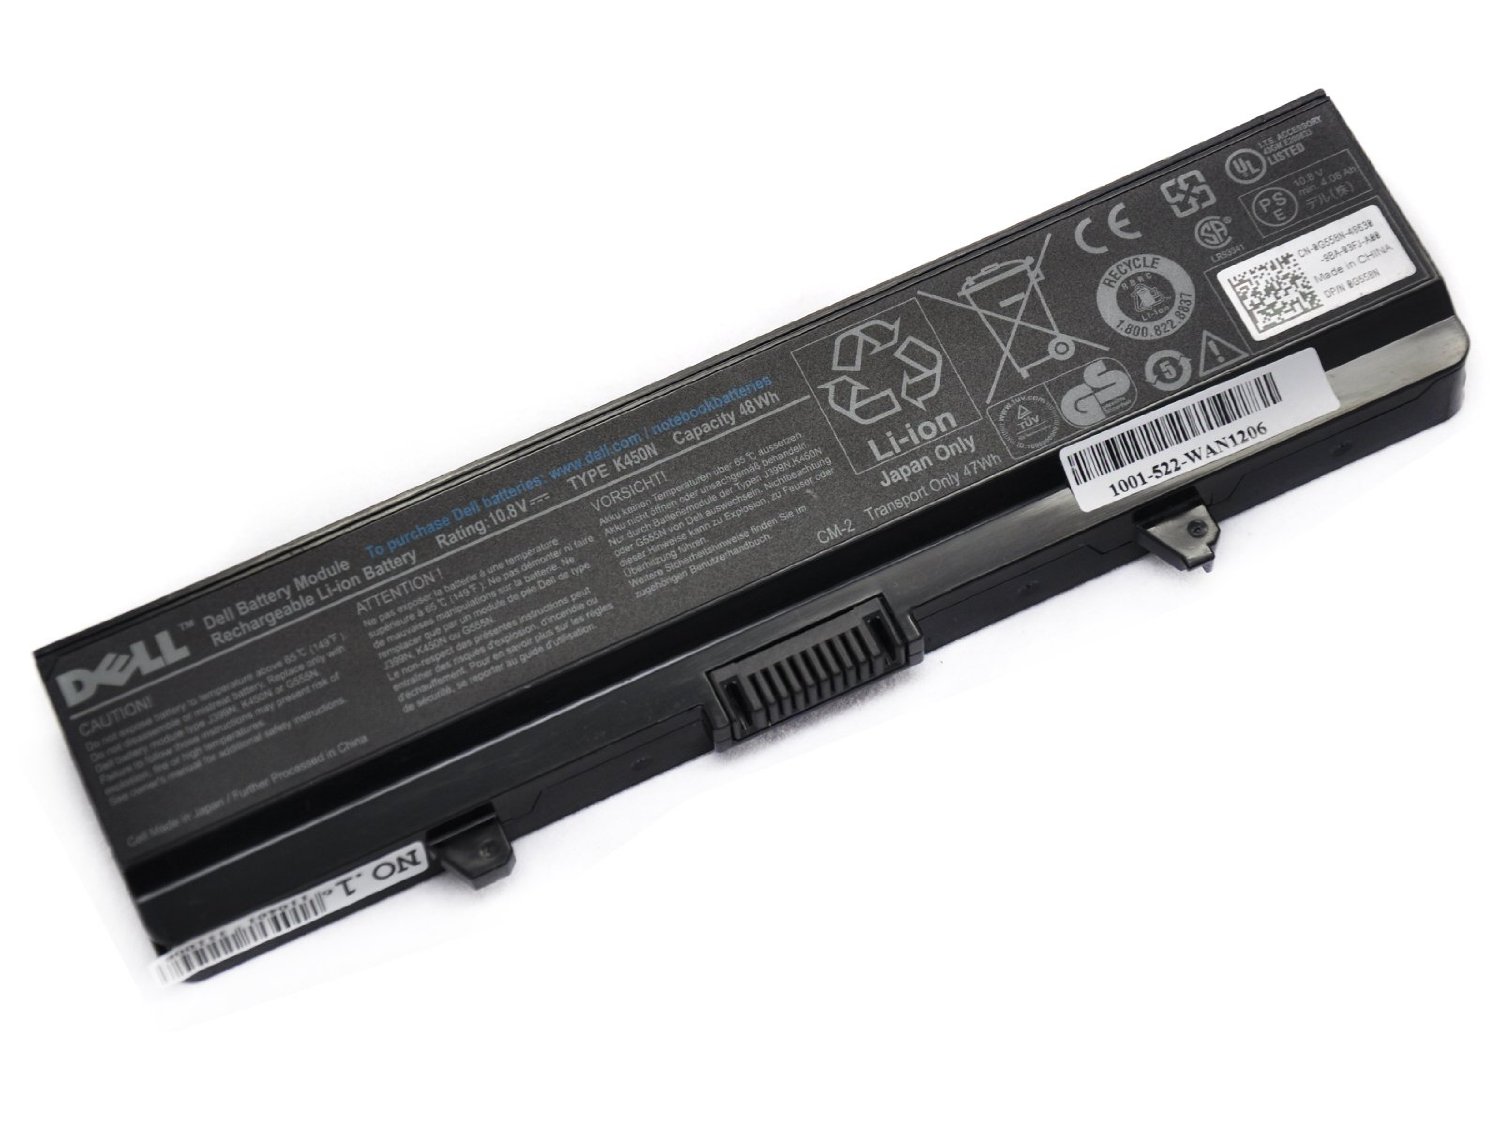 original genuine 6 cell K450N G555N battery for Dell Inspiron 1440, Inspiron 1750 Laptop